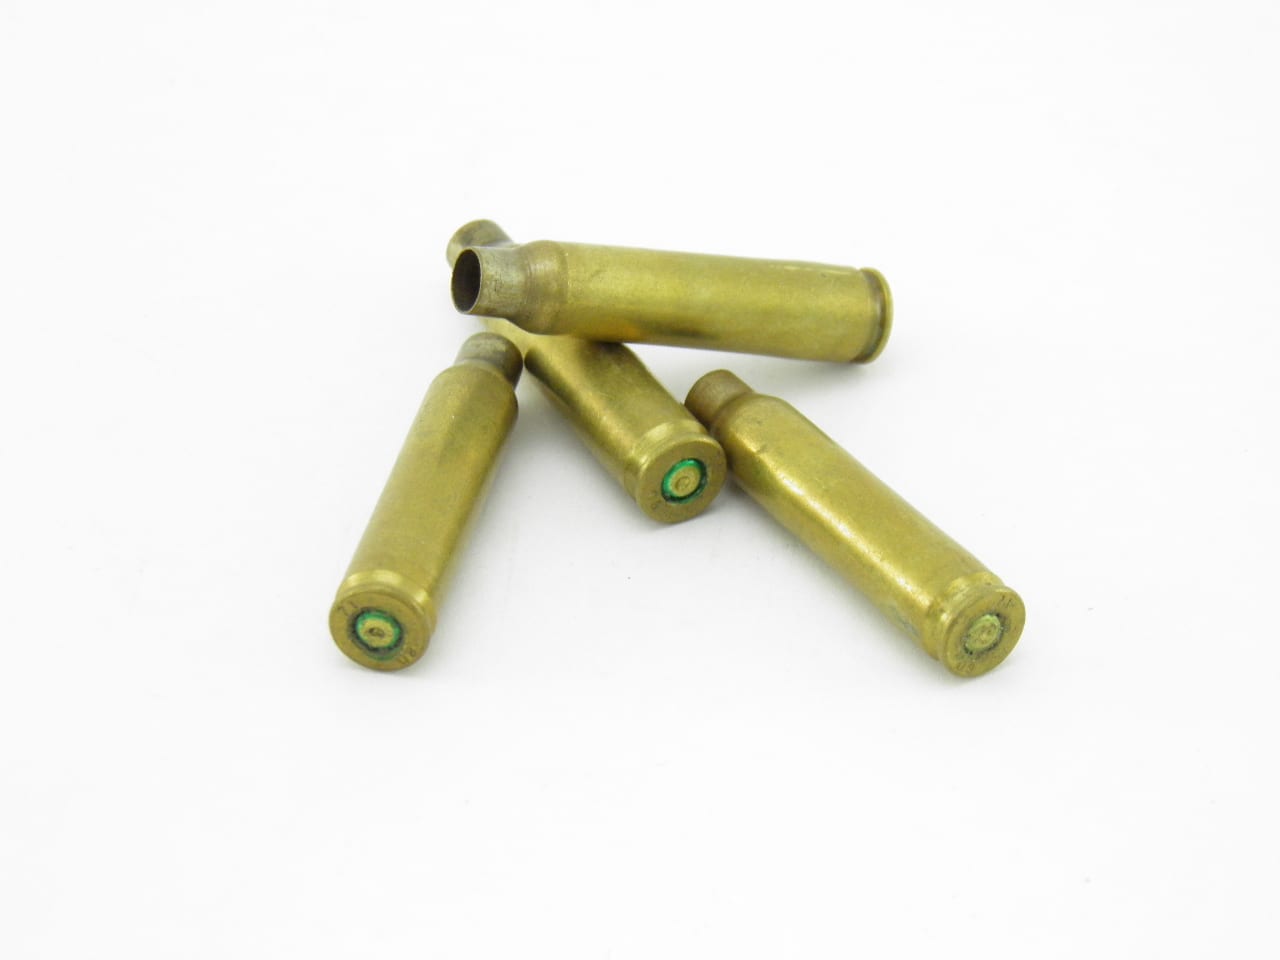 Empty gun cartridges – recycled brass